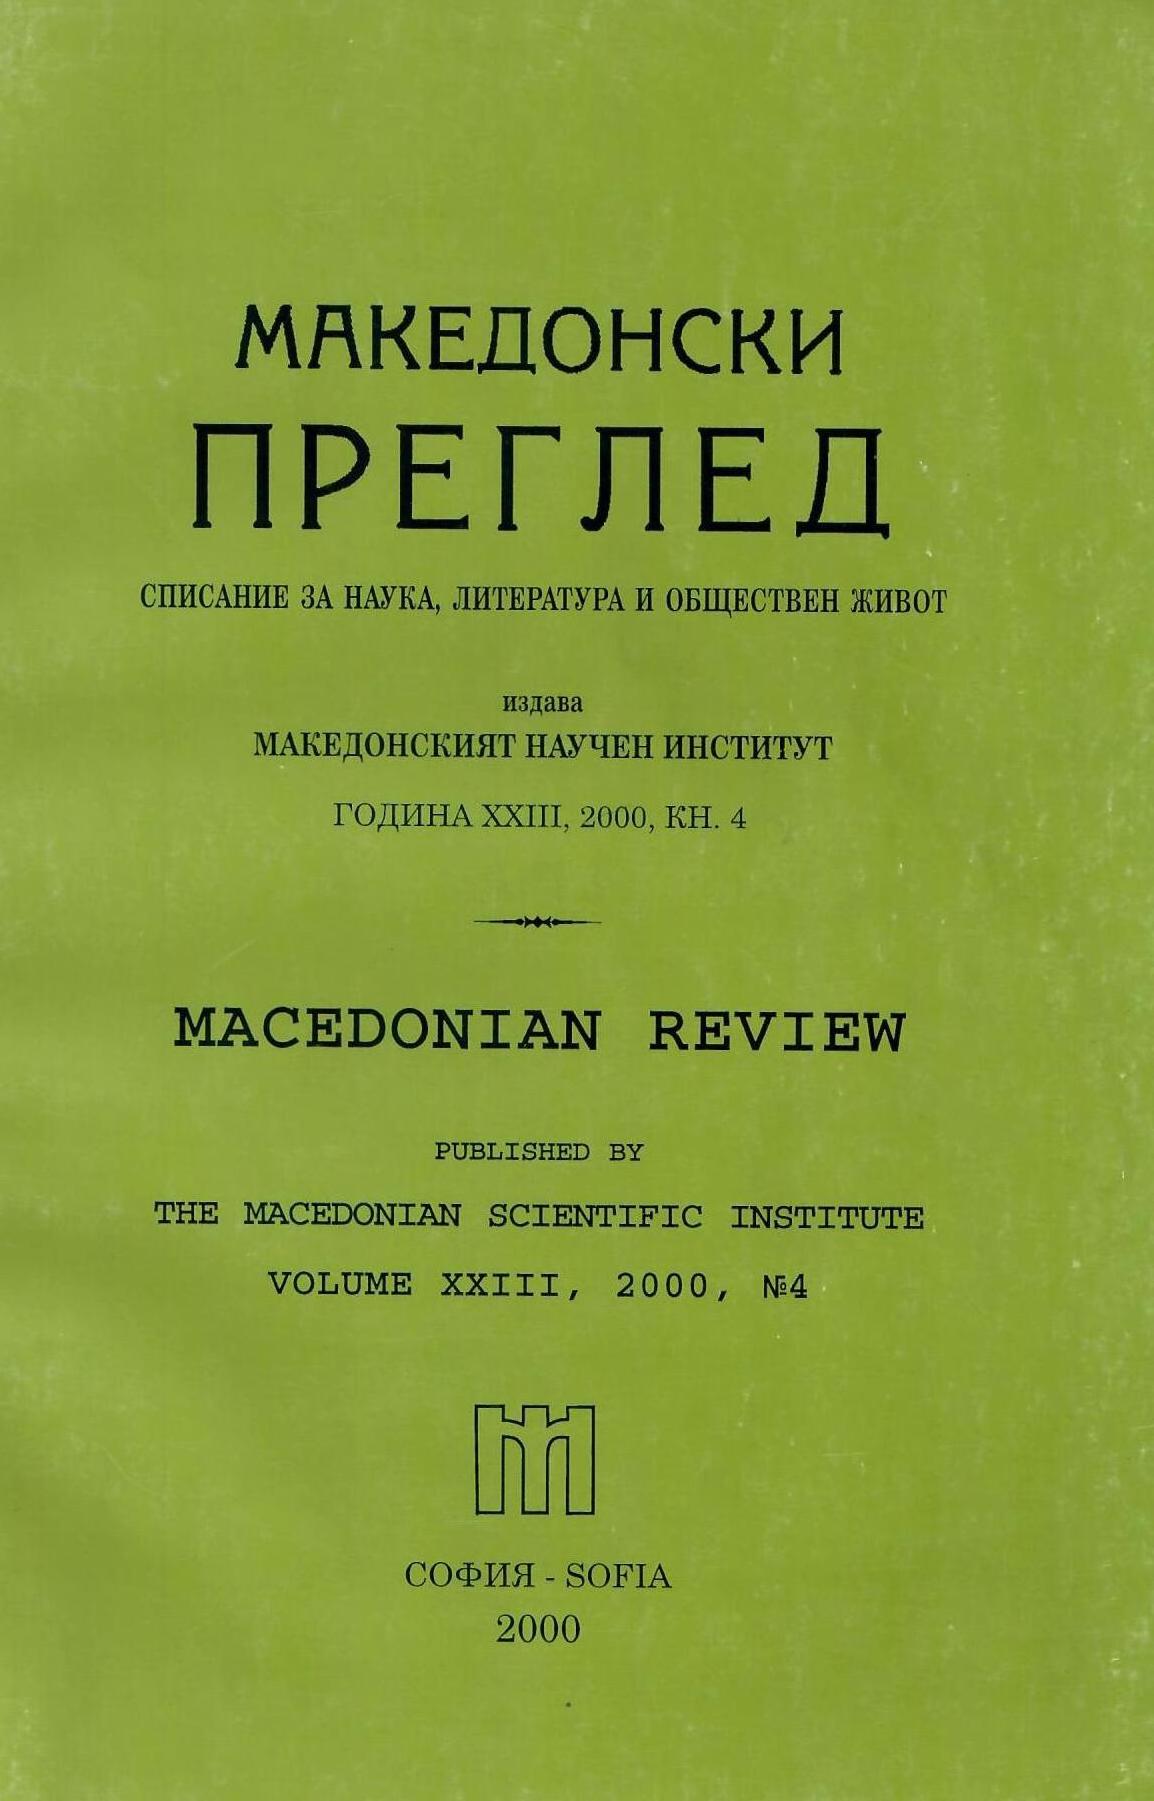 Georgy Stoykov Rakovsky and Macedonia Cover Image